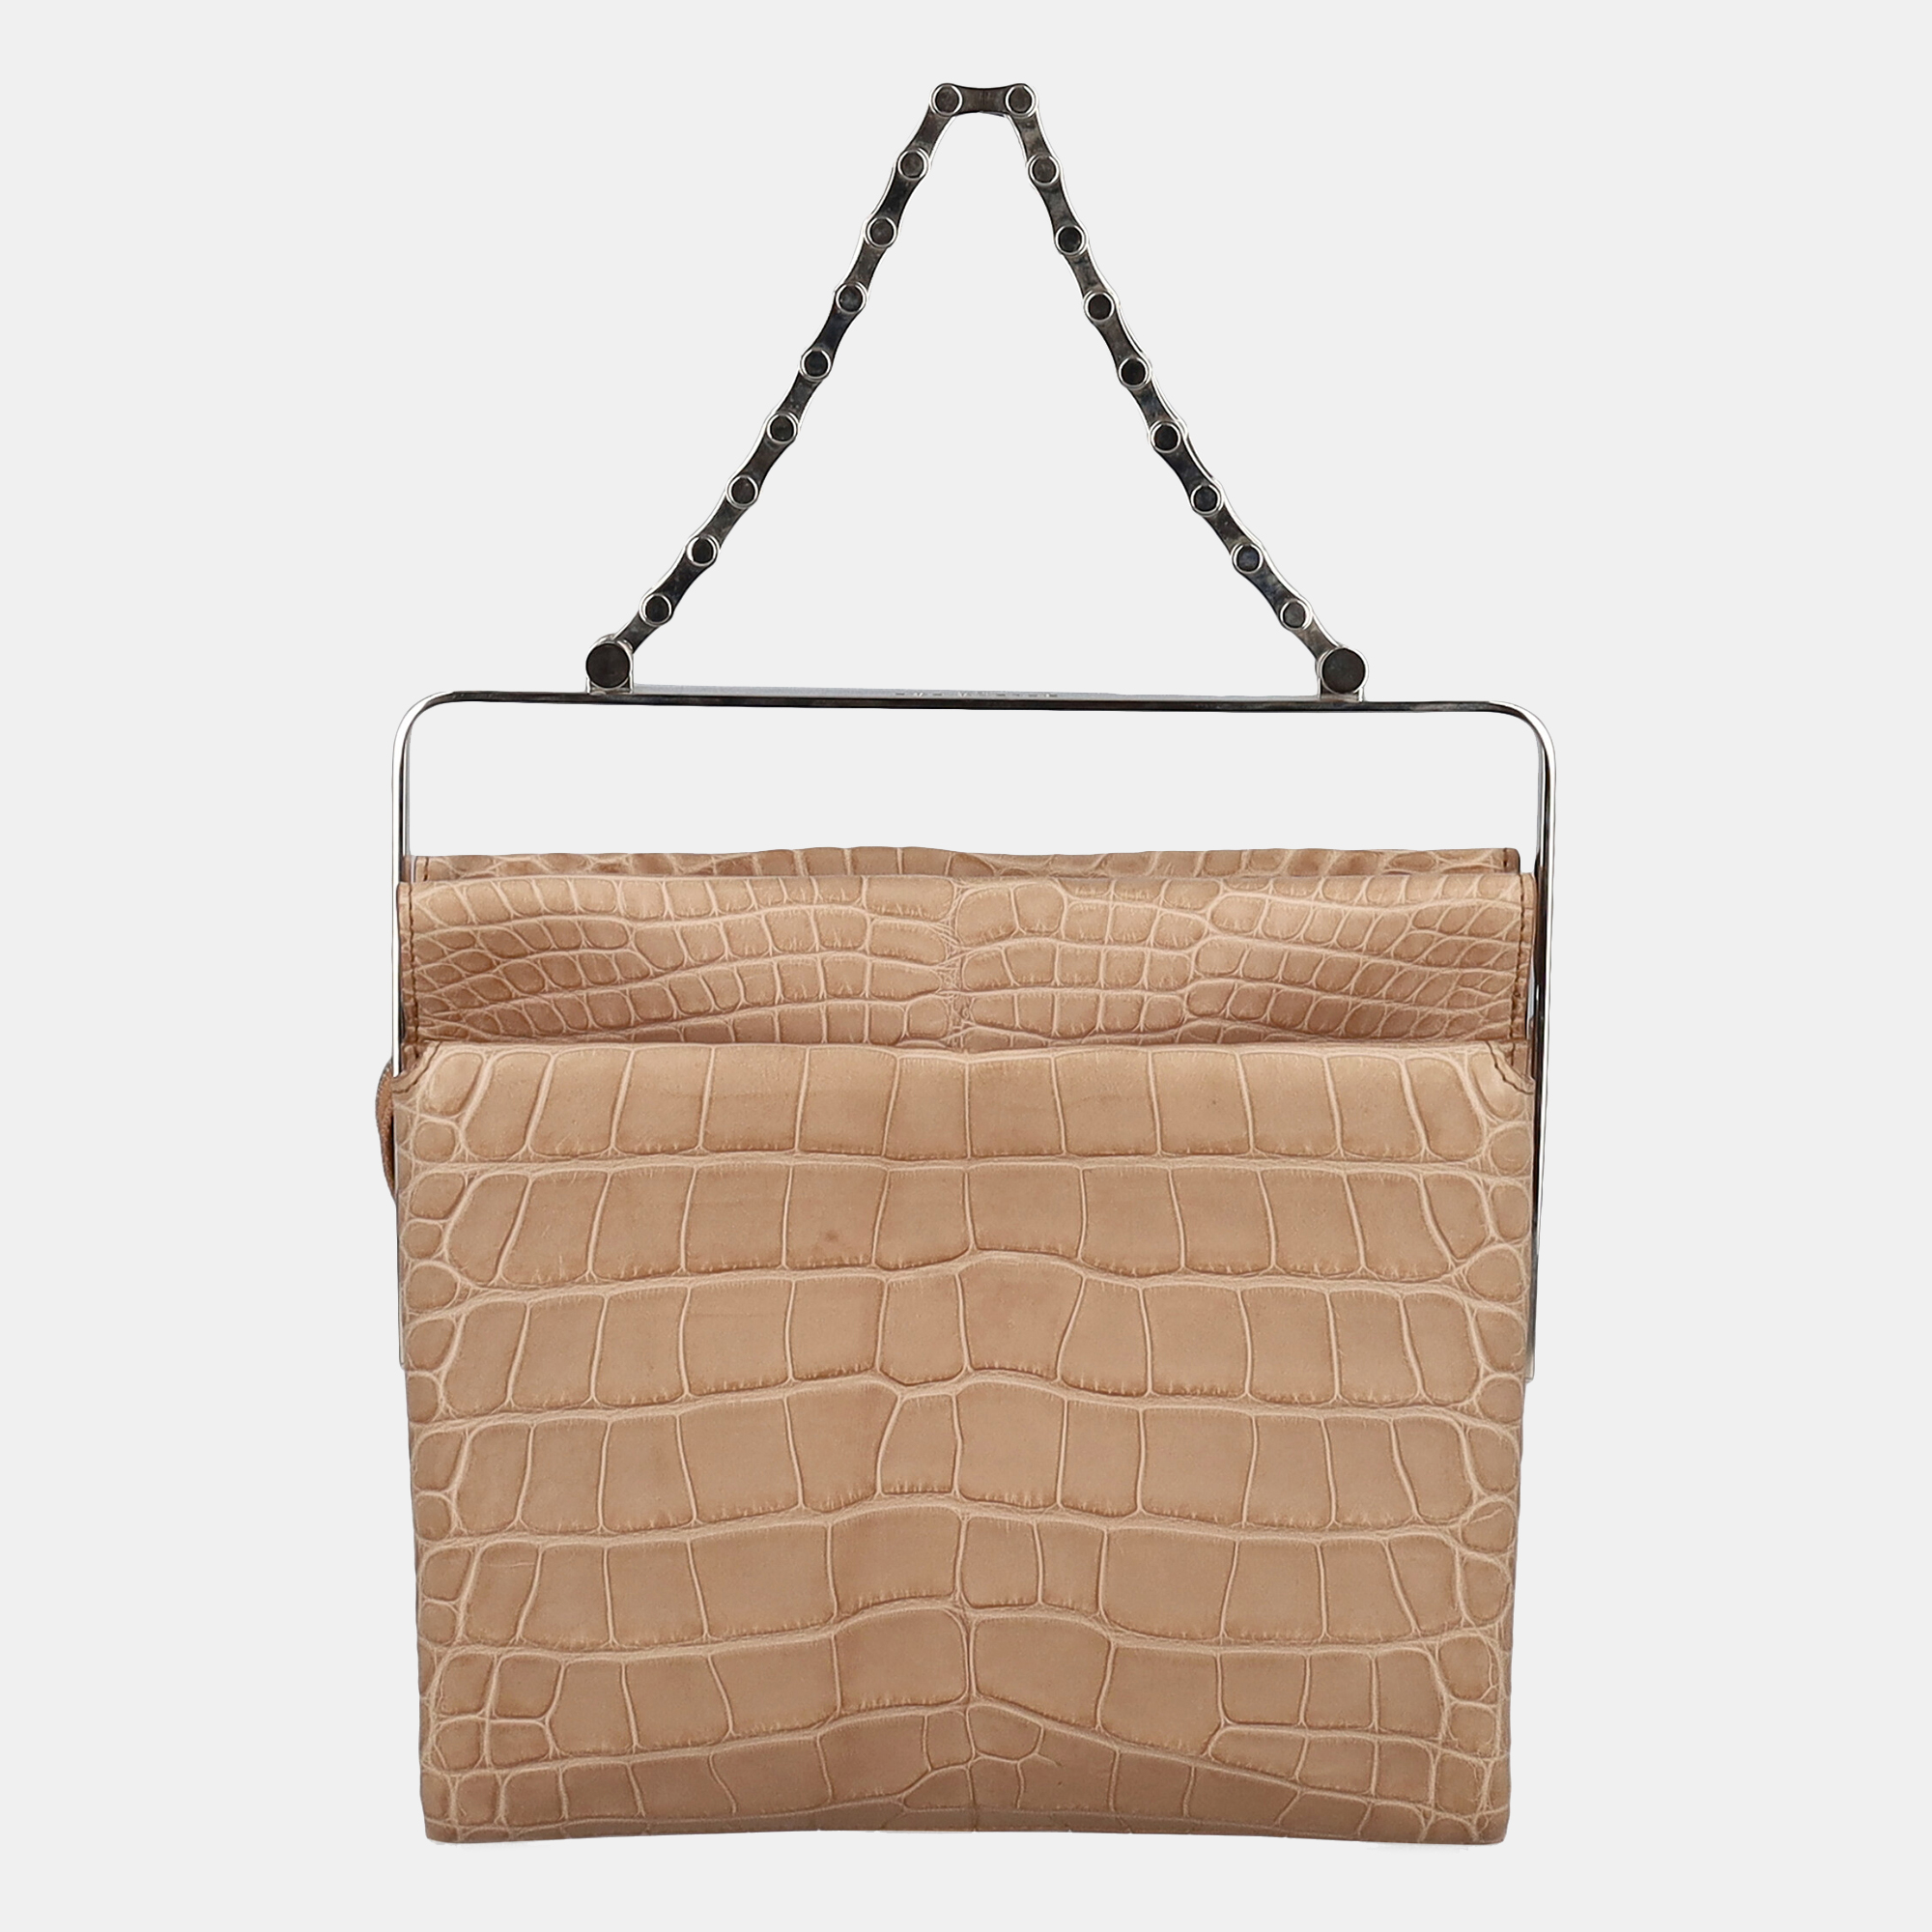 Balenciaga  Women's Leather Handbag - Beige - One Size